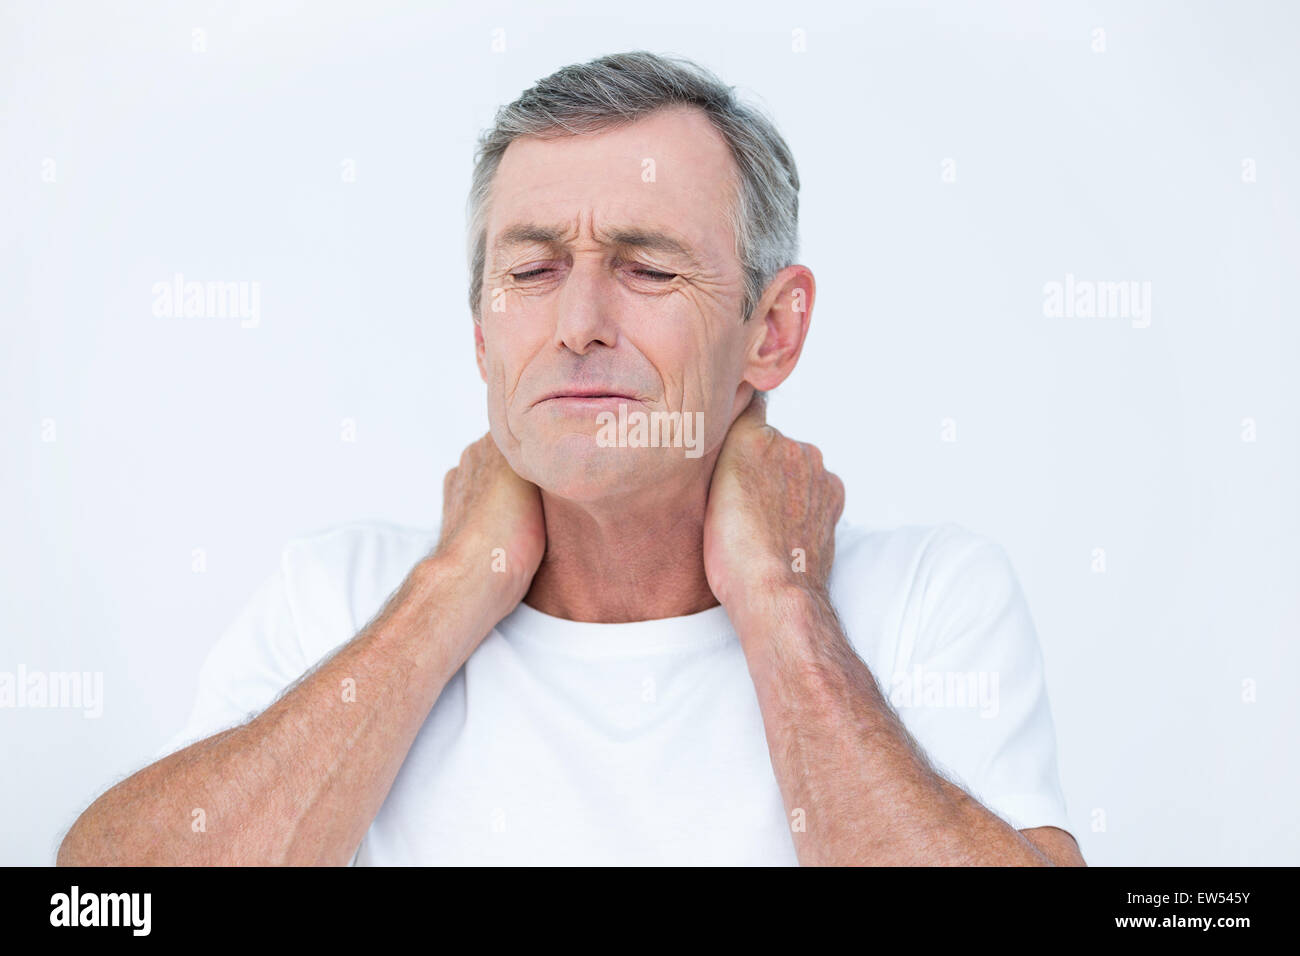 Patient with neck ache Stock Photo